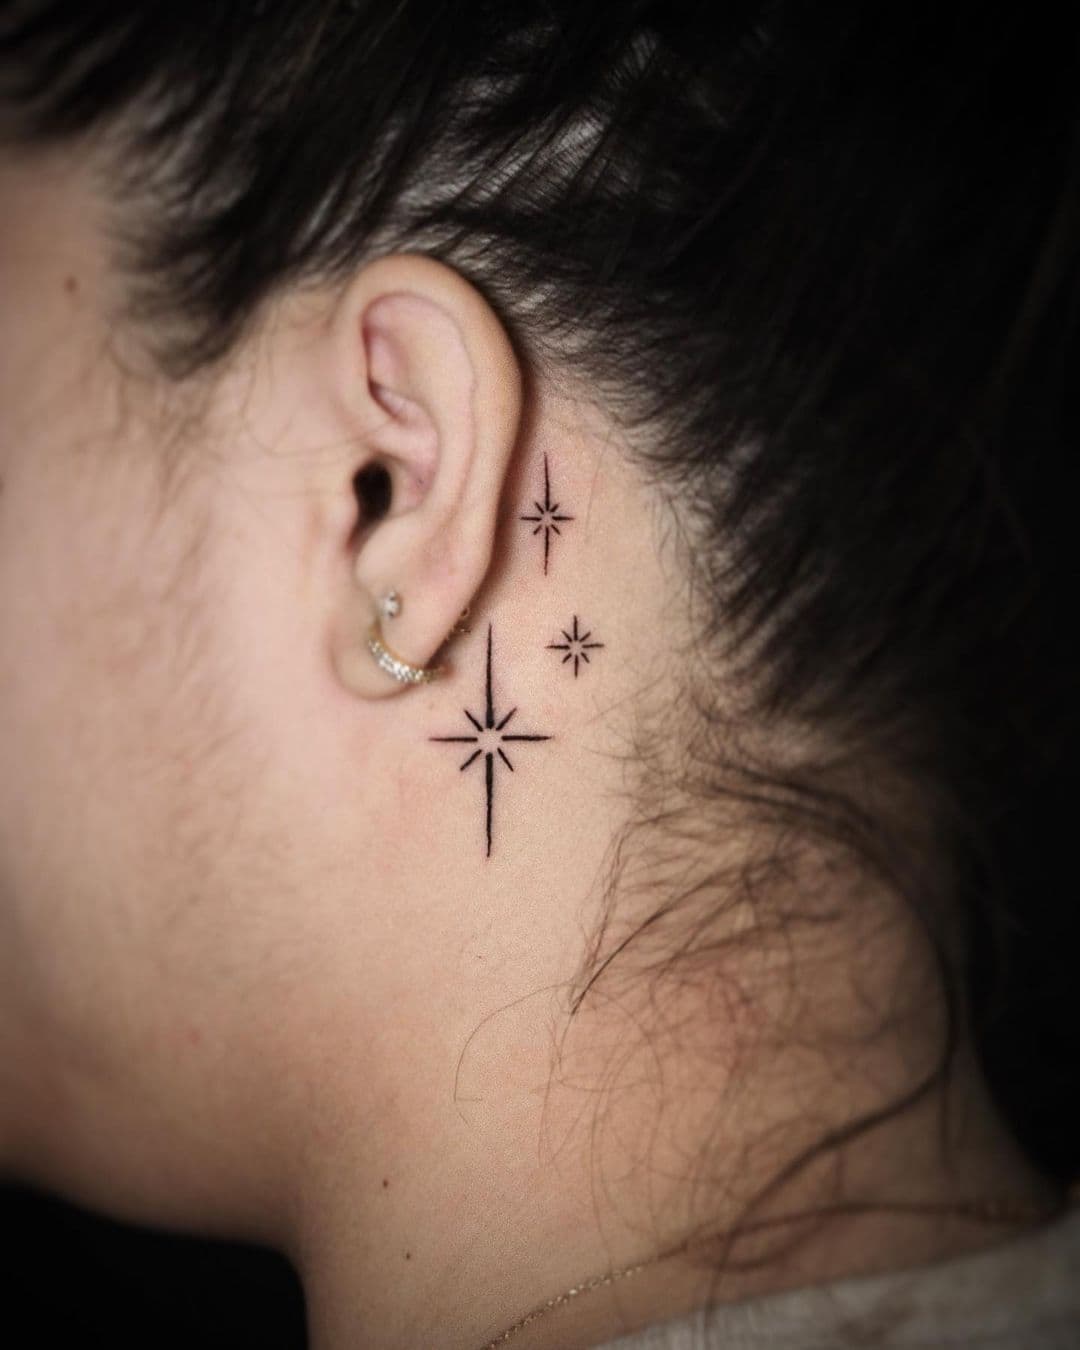 Star behind the tattoo hero tattoo 1